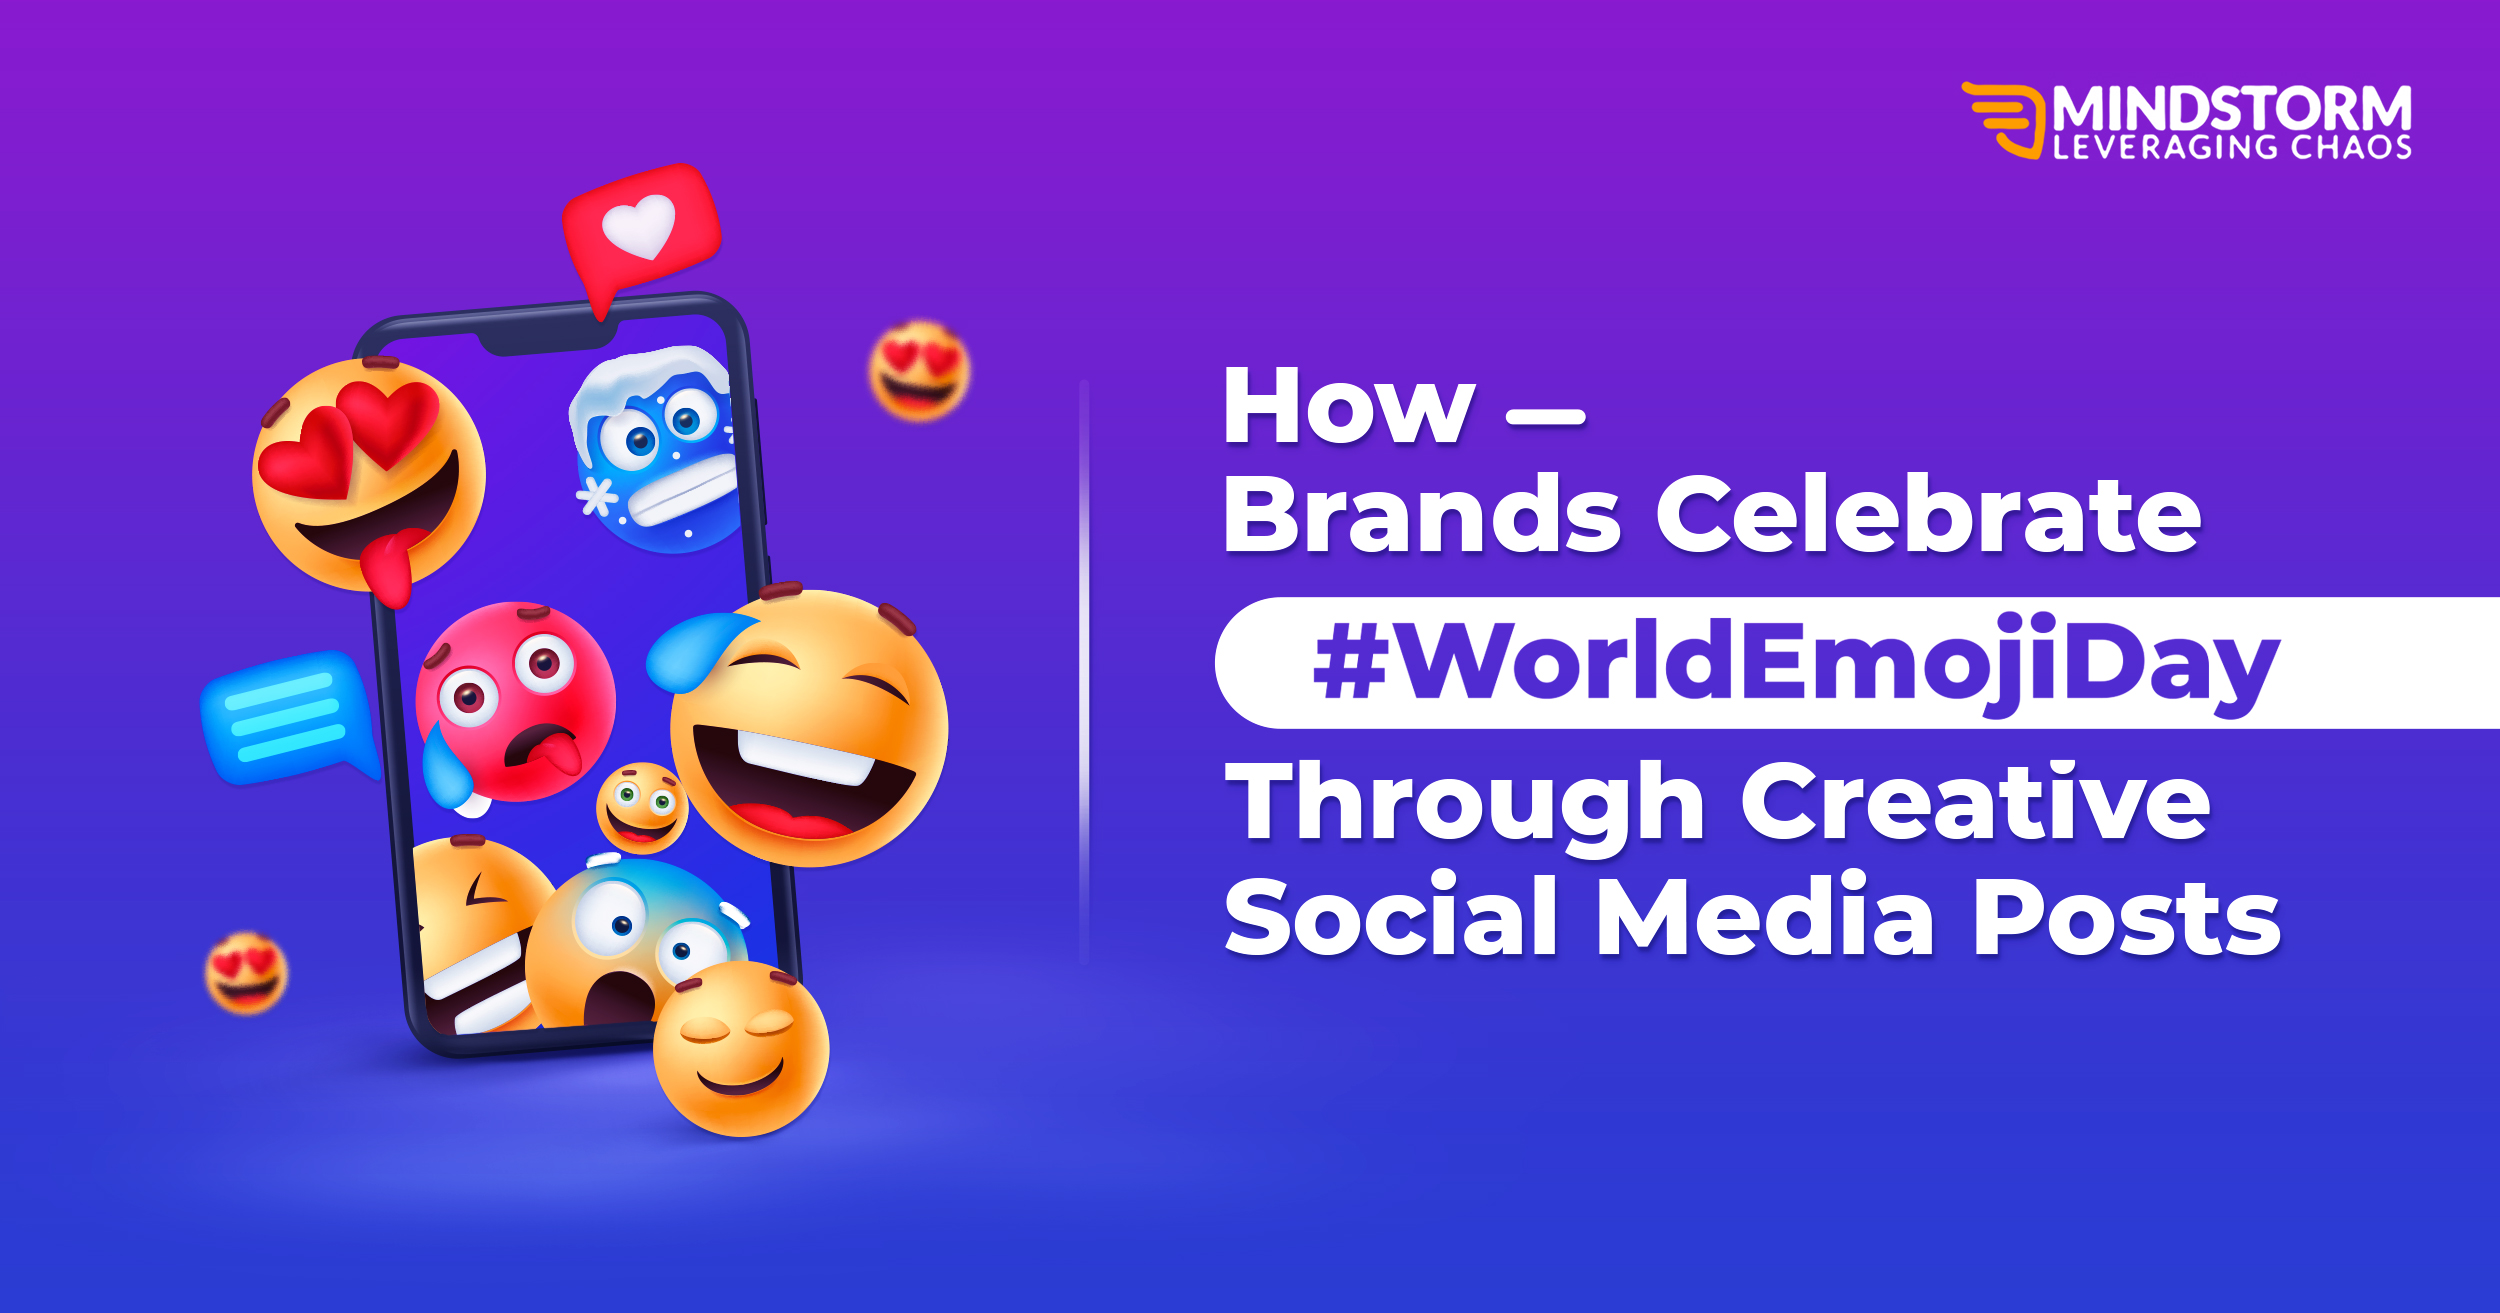 How Brands Celebrate #WorldEmojiDay Through Creative Social Media Posts